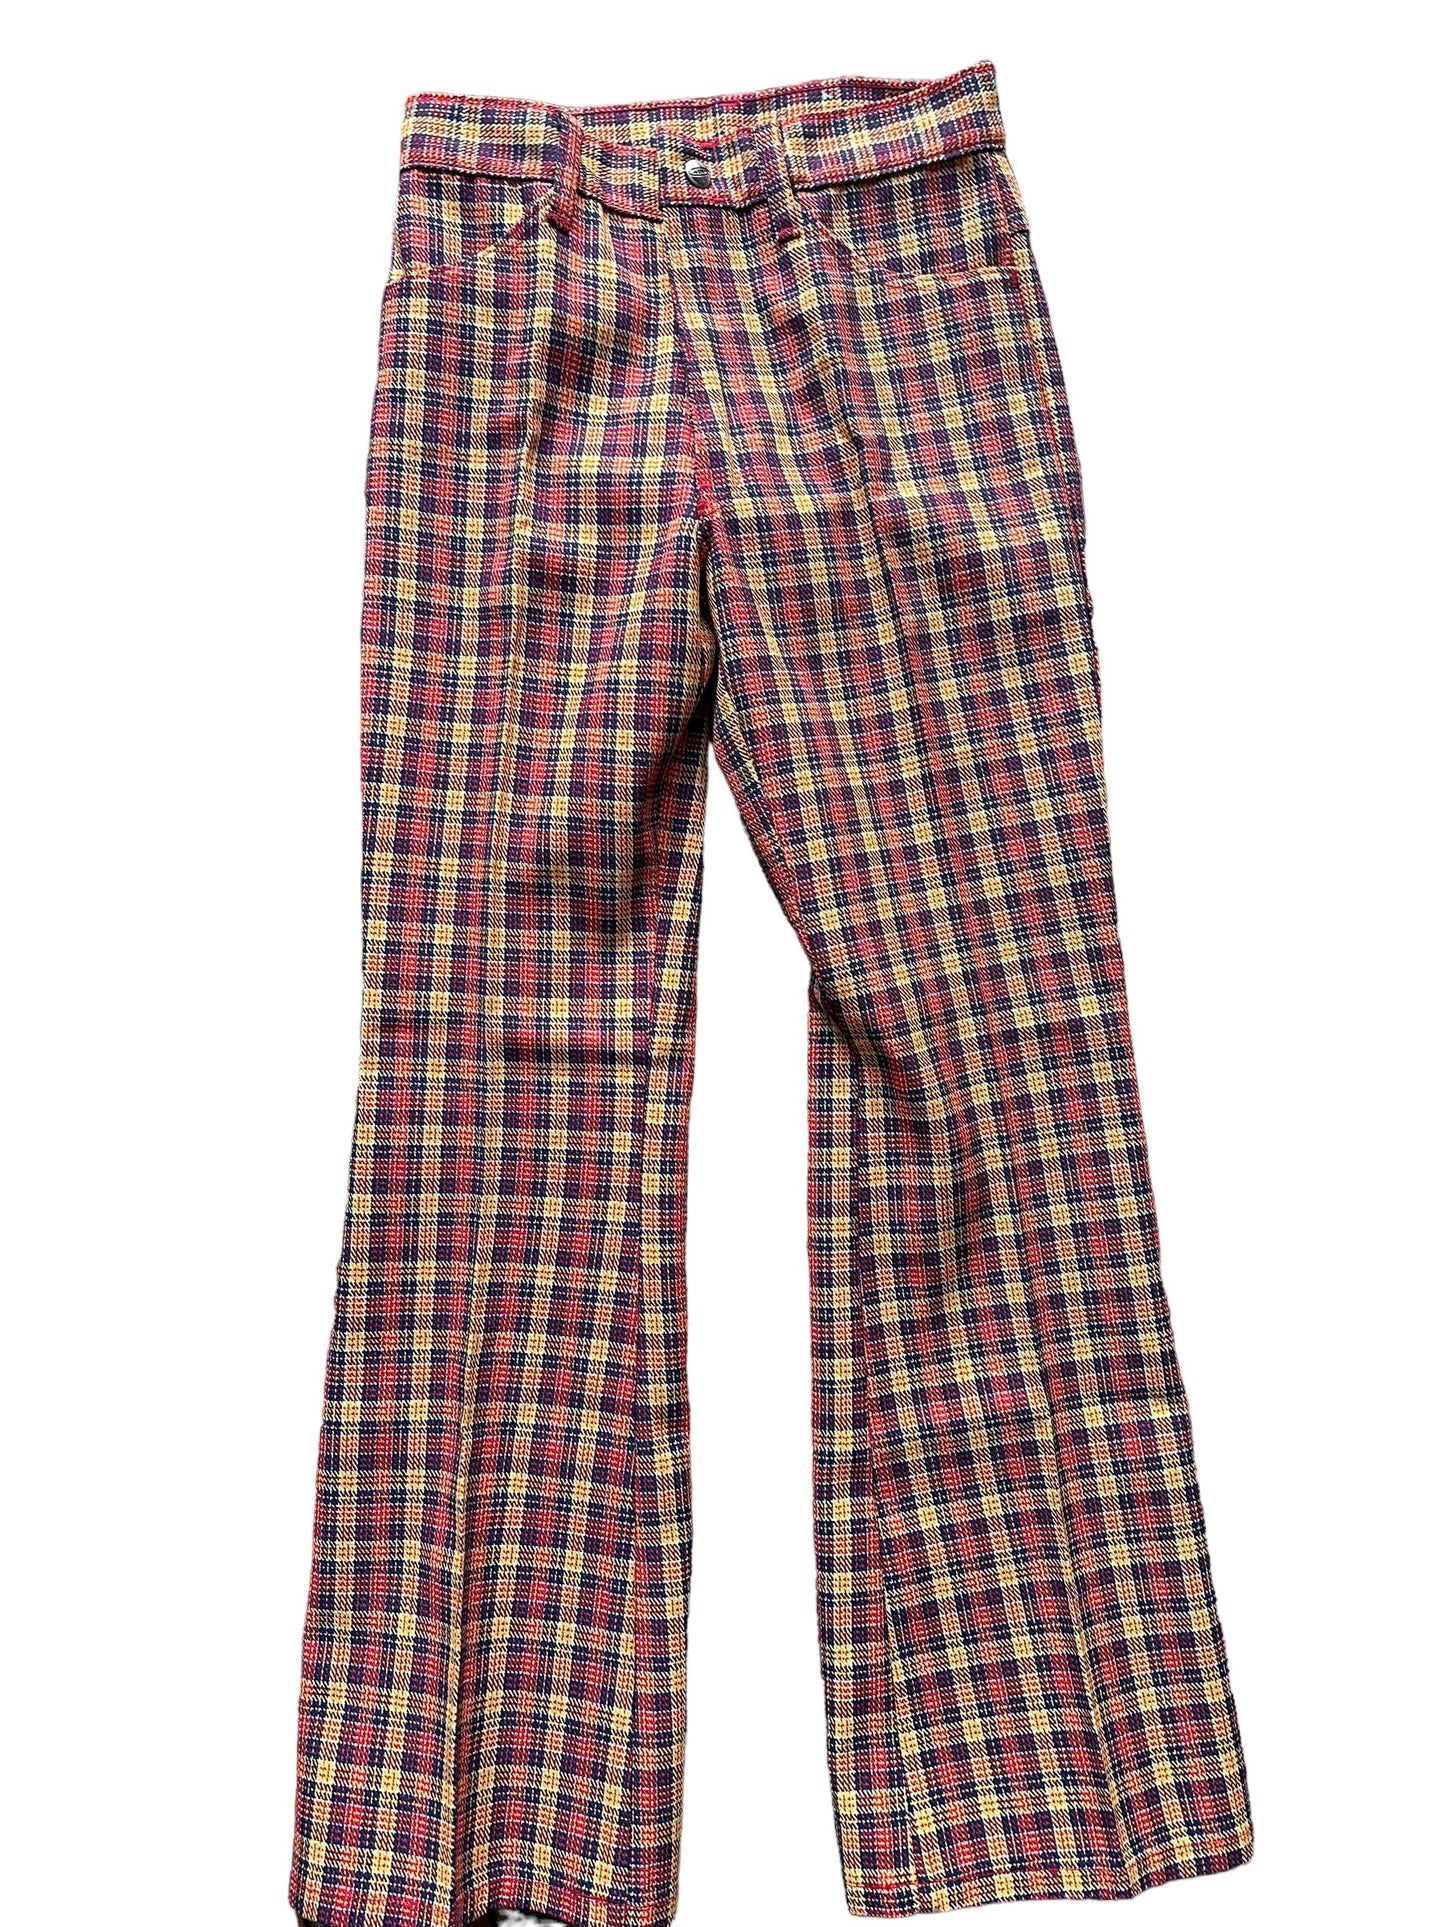 Full front viewof Vintage Deadstock Plaid Mann Pants 26x28 | Vintage Deadstock Trousers | Barn Owl Seattle Vintage